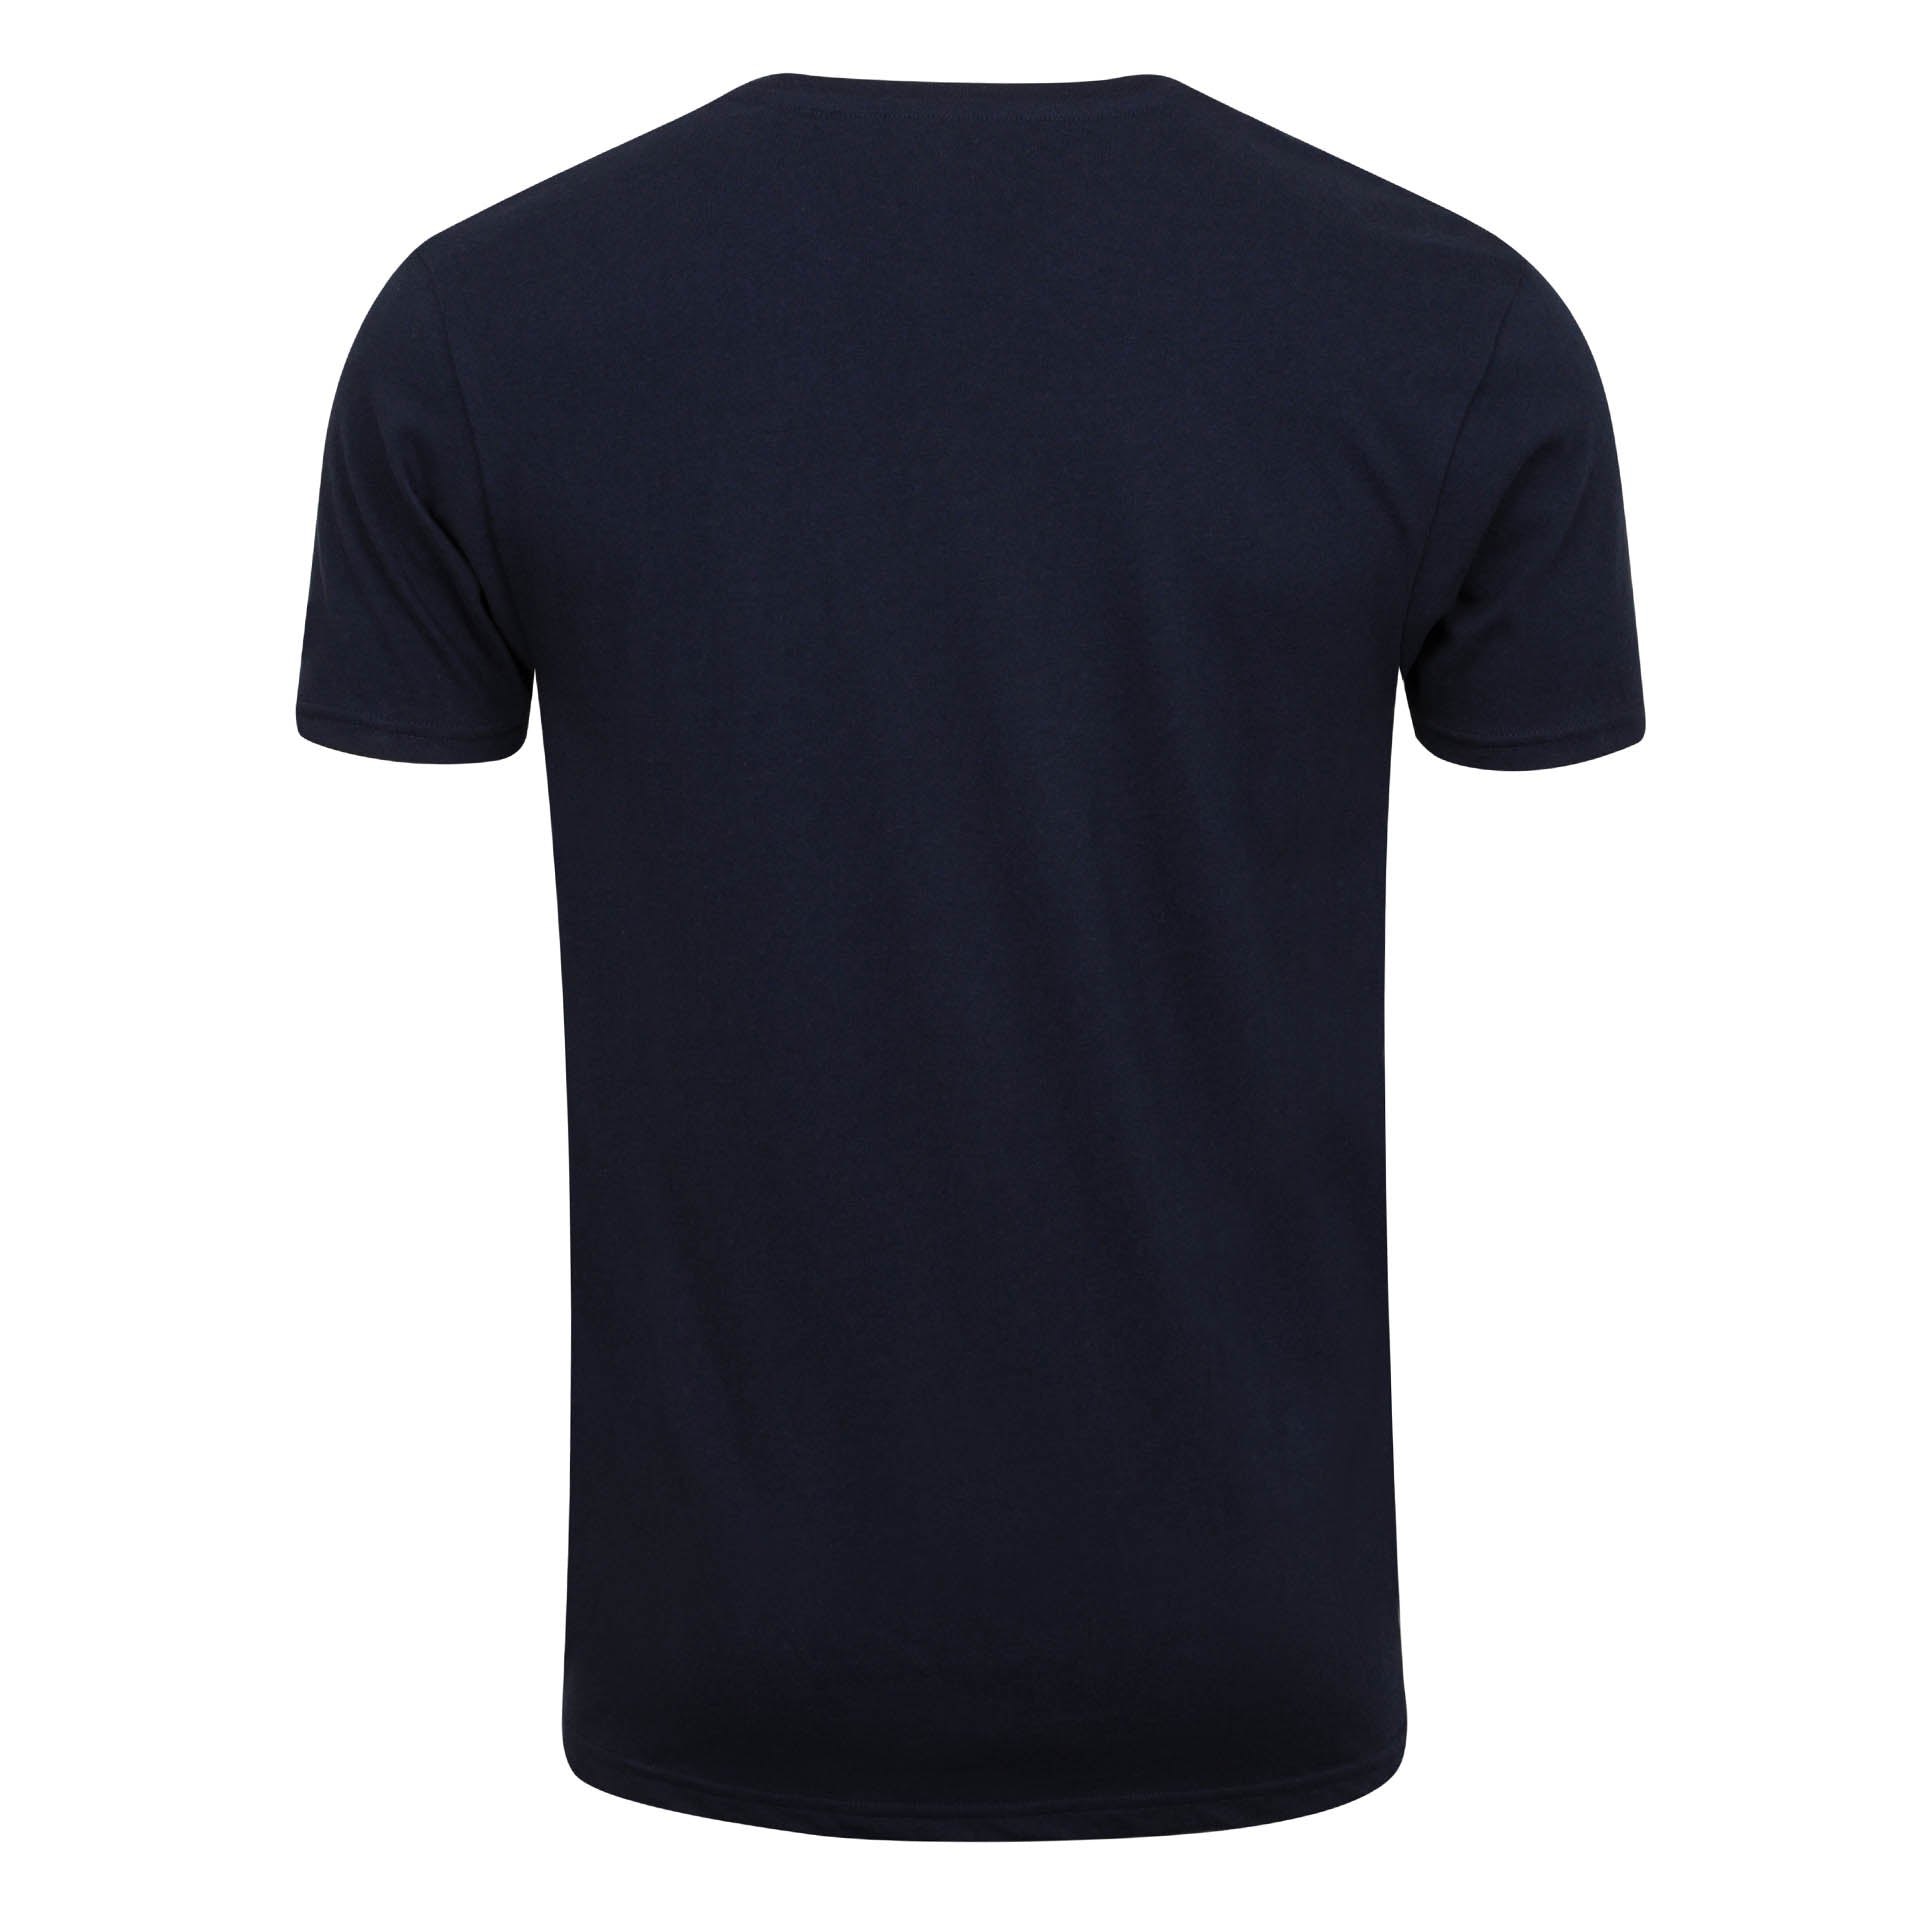 Tiide Big Logo Short Sleeve T-Shirt Navy